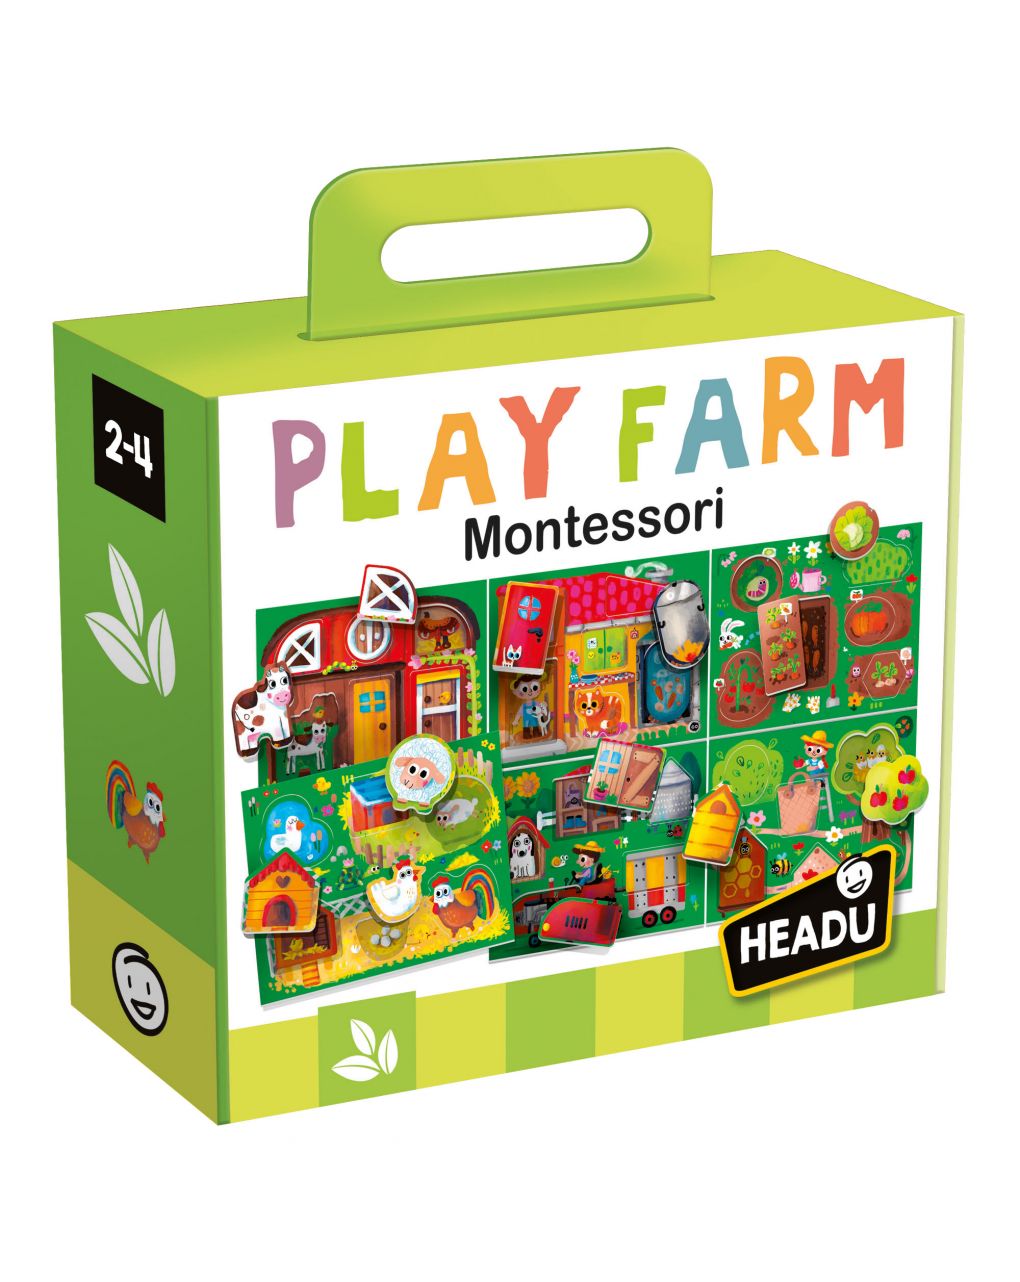 Play farm montessori. prime scoperte nella fattoria! 2/4 anni - headu - Headu